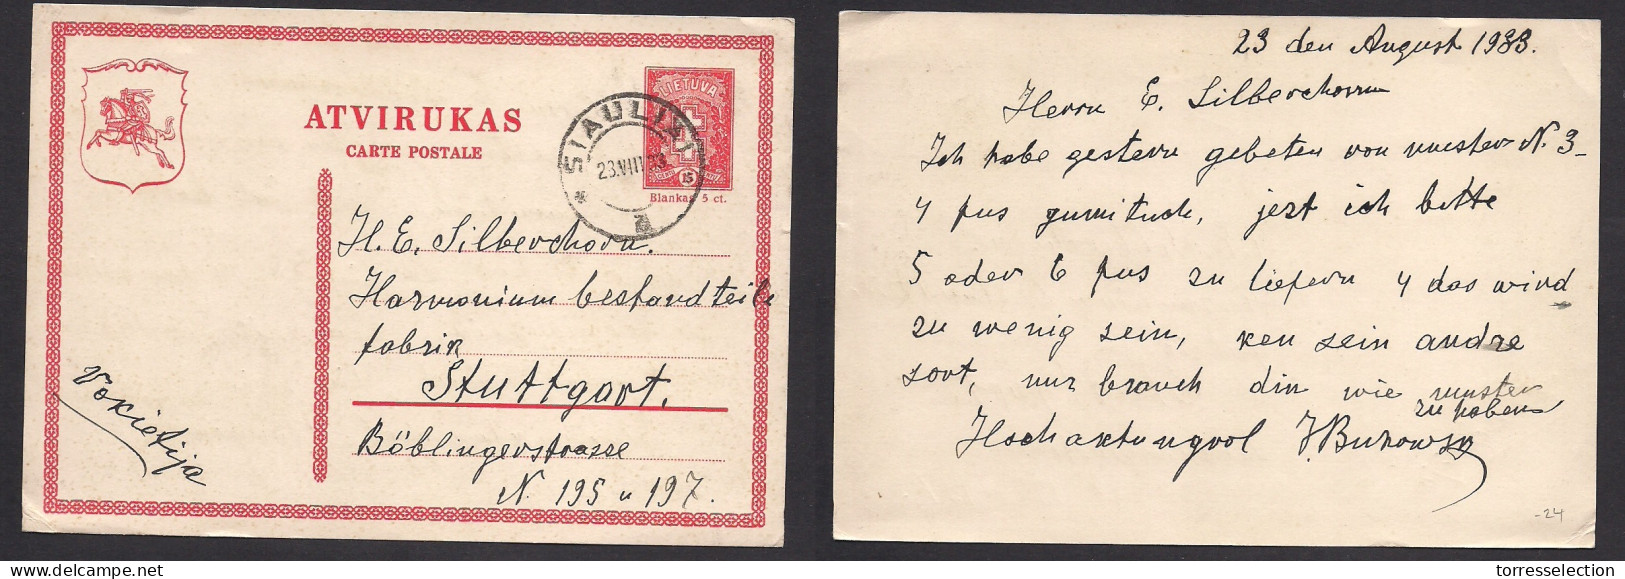 LITHUANIA. 1933 (28 Aug) Siauliai - Germany, Stuttgart. 5c Red Stat Card. Fine Used. XSALE. - Lithuania